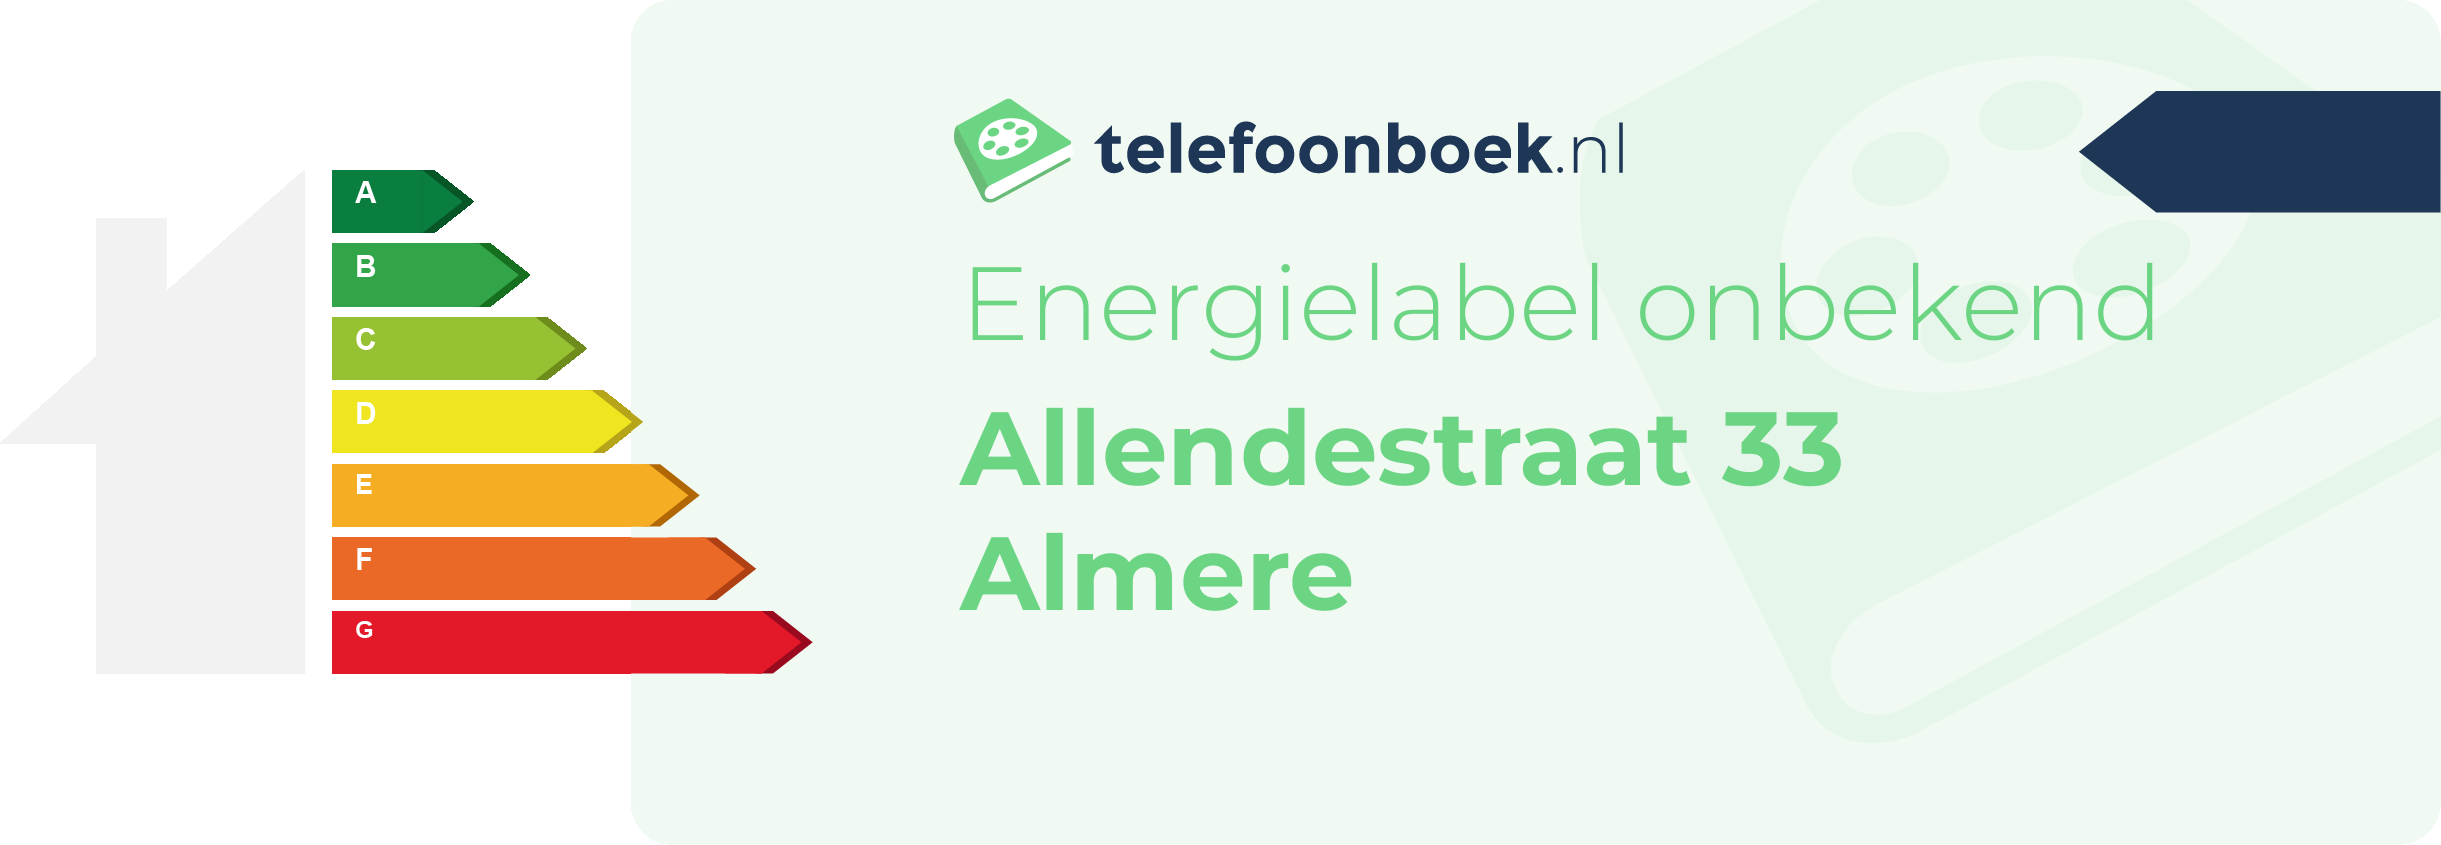 Energielabel Allendestraat 33 Almere